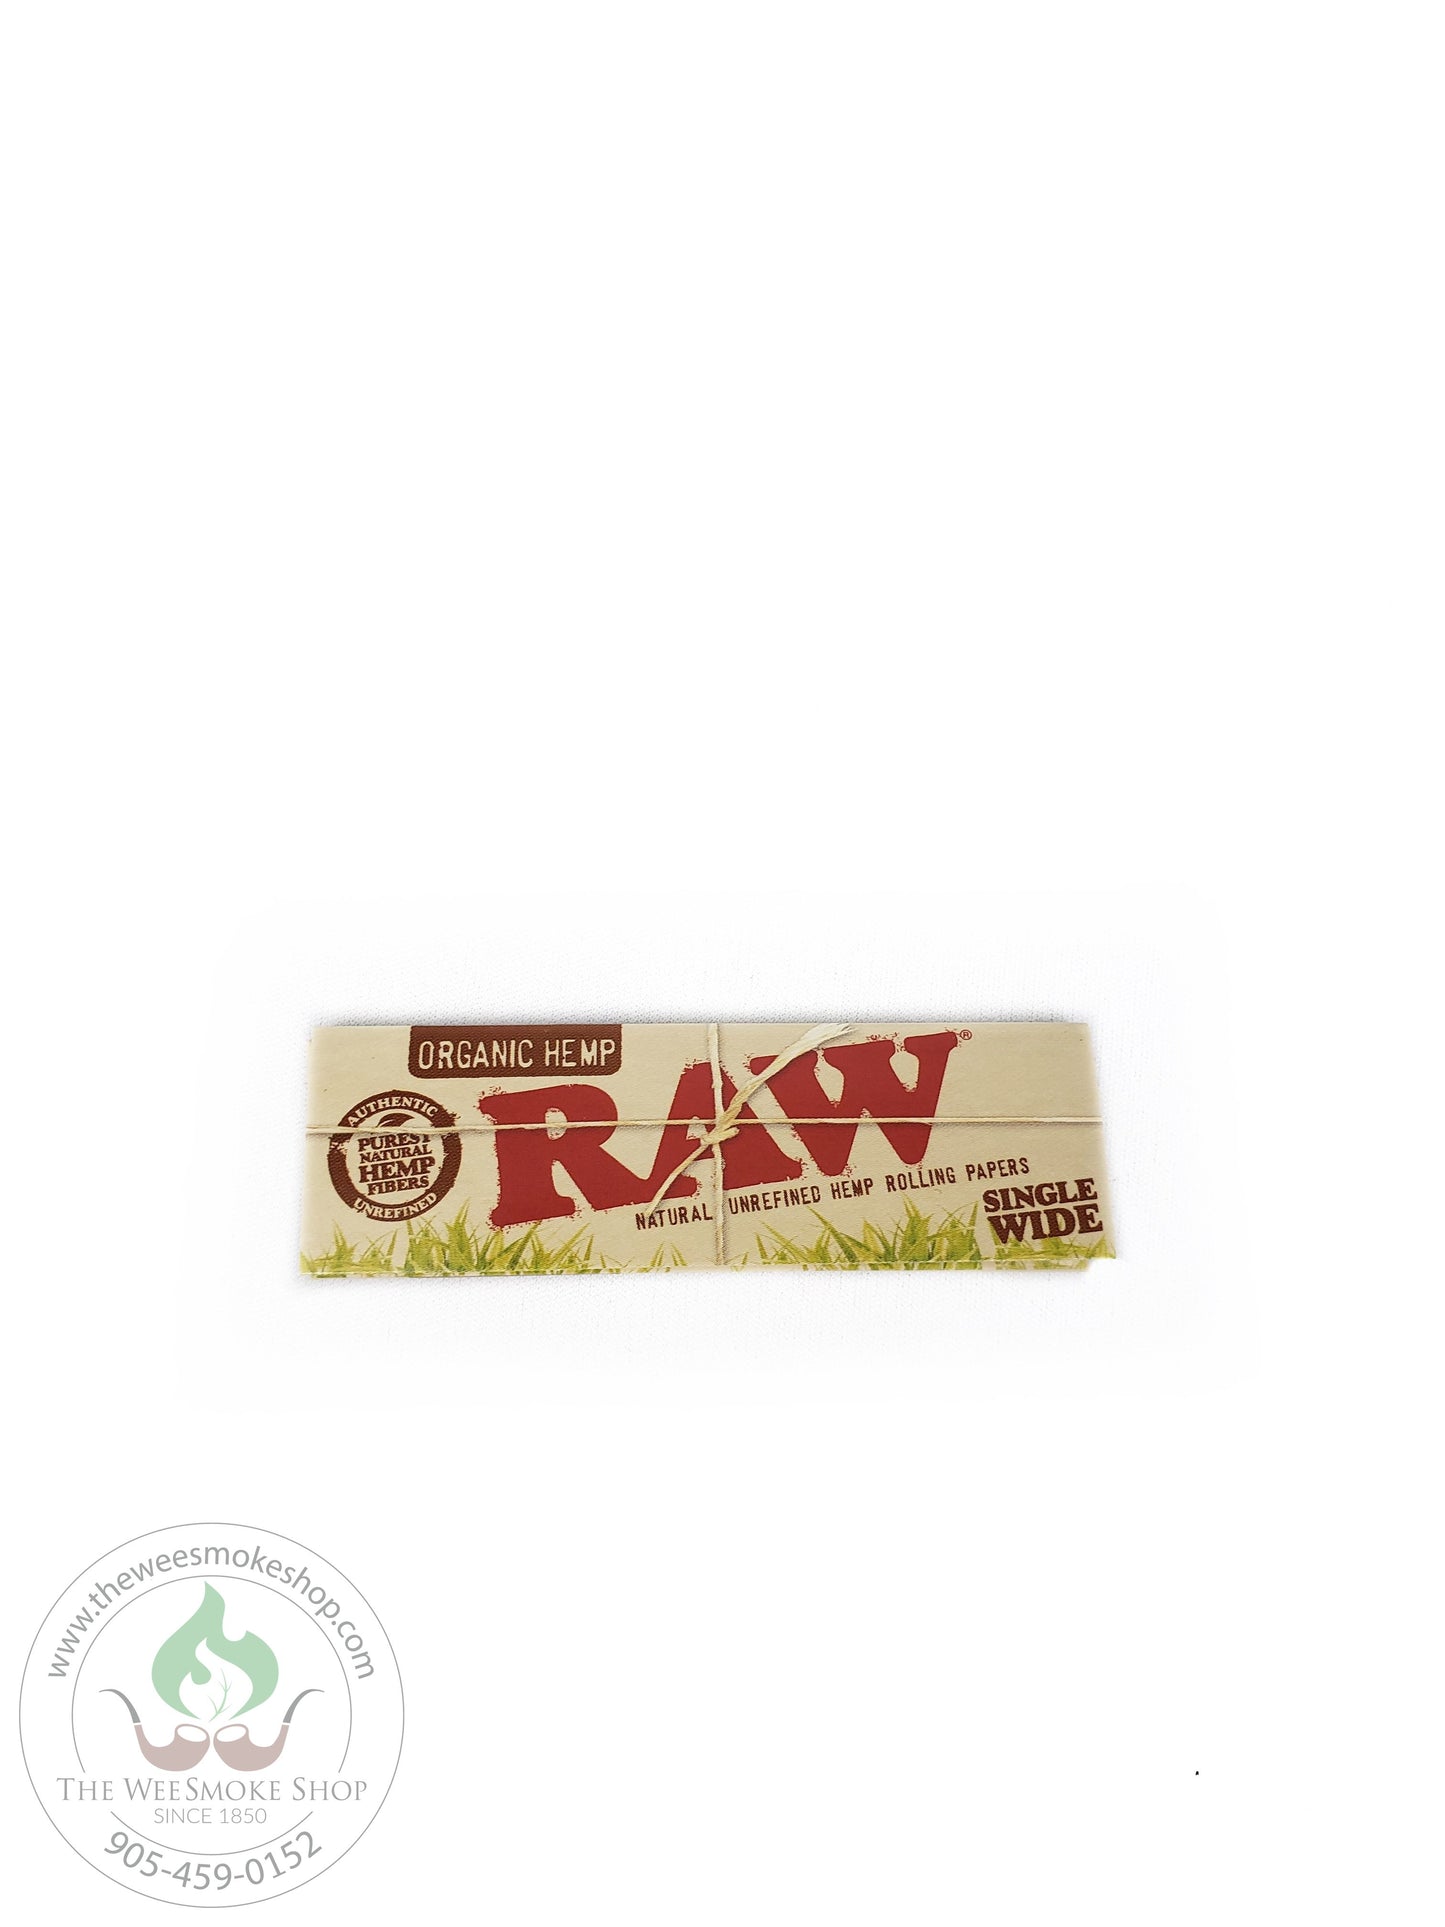 RAW Organic Hemp Rolling Papers. Single Wide. Single window.